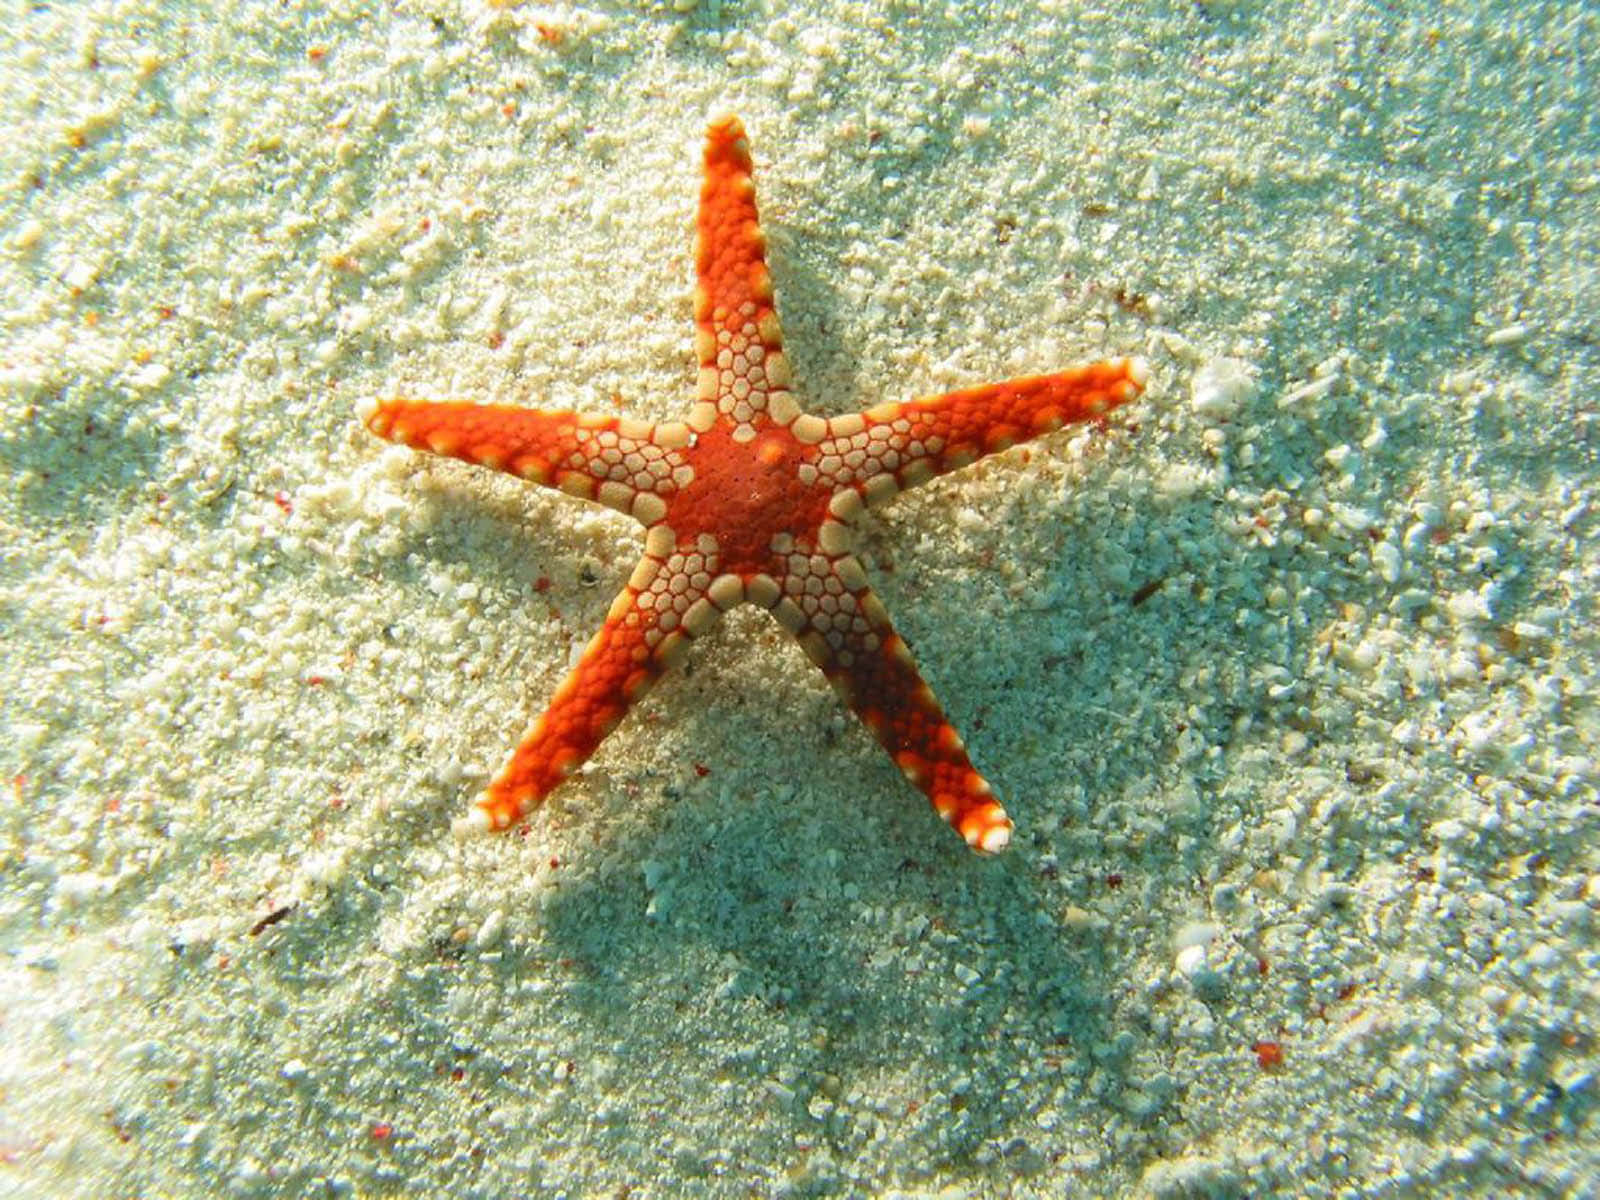 Starfish in its colorful habitats